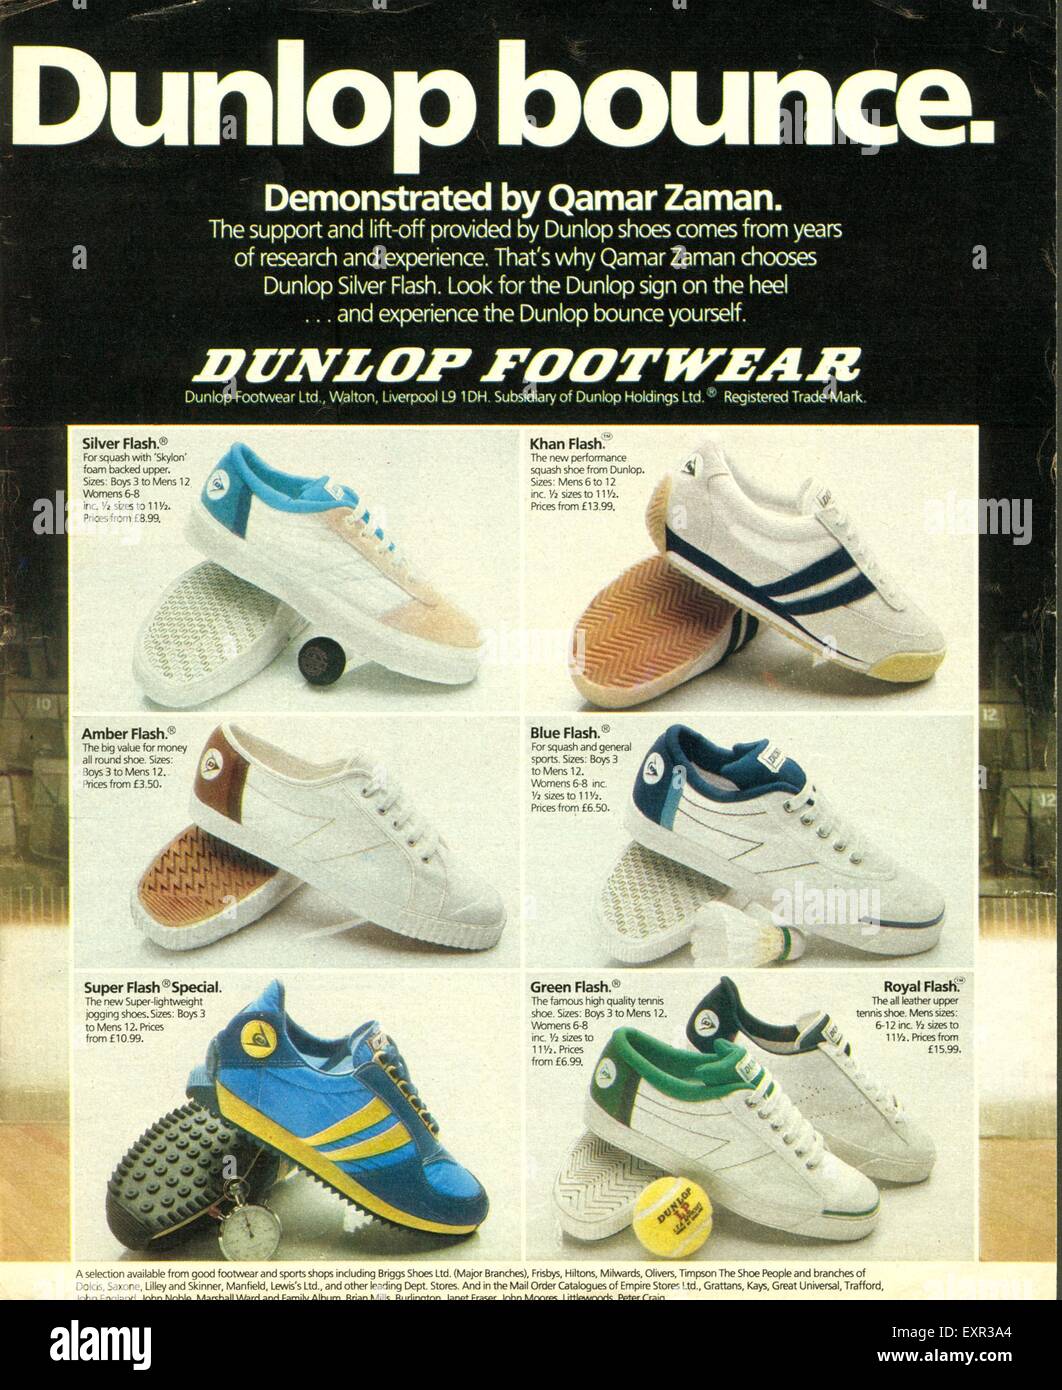 dunlop tennis shoes uk